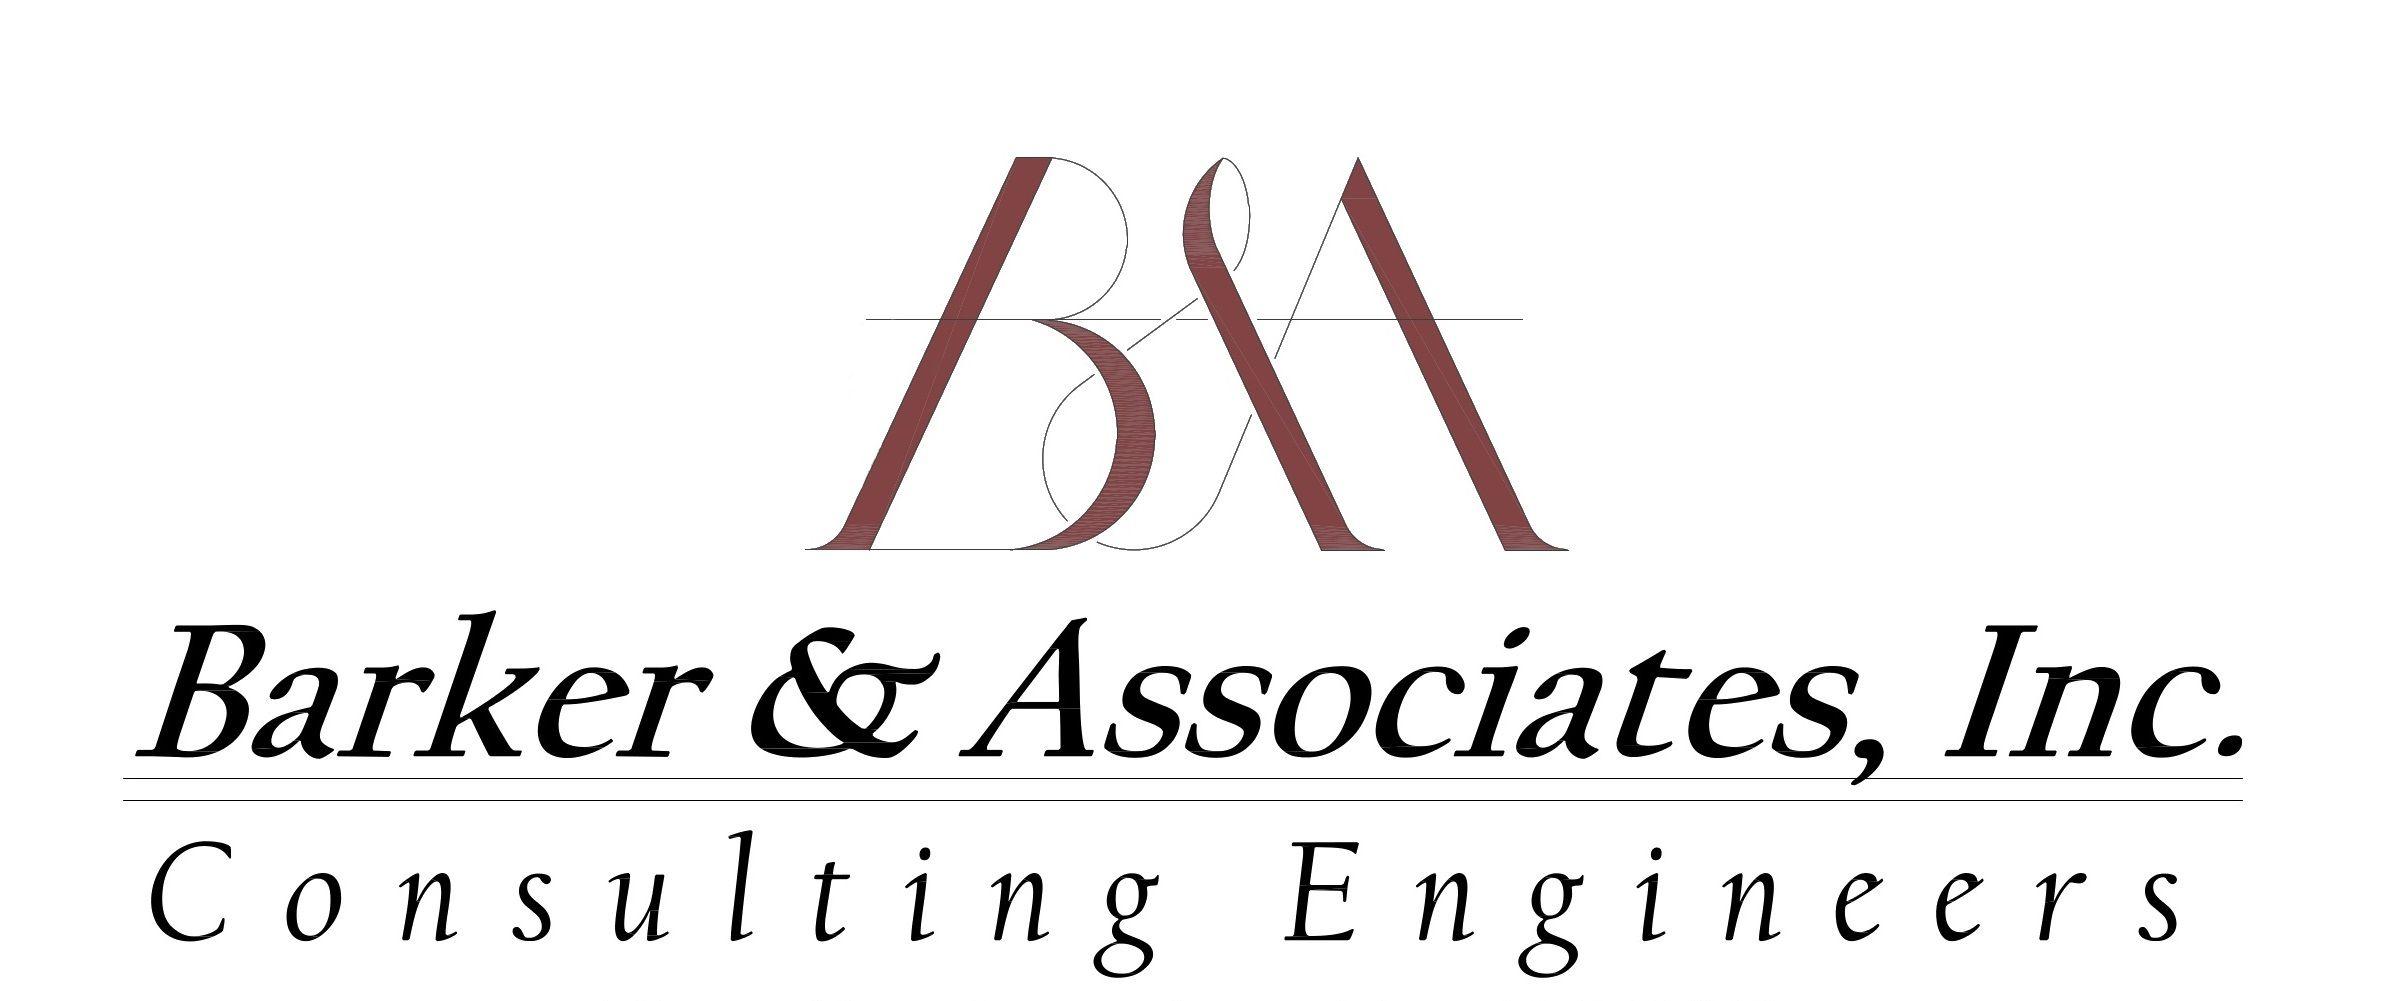 Burgandy and White Rectangle Logo - BA Logo Burgundy On White